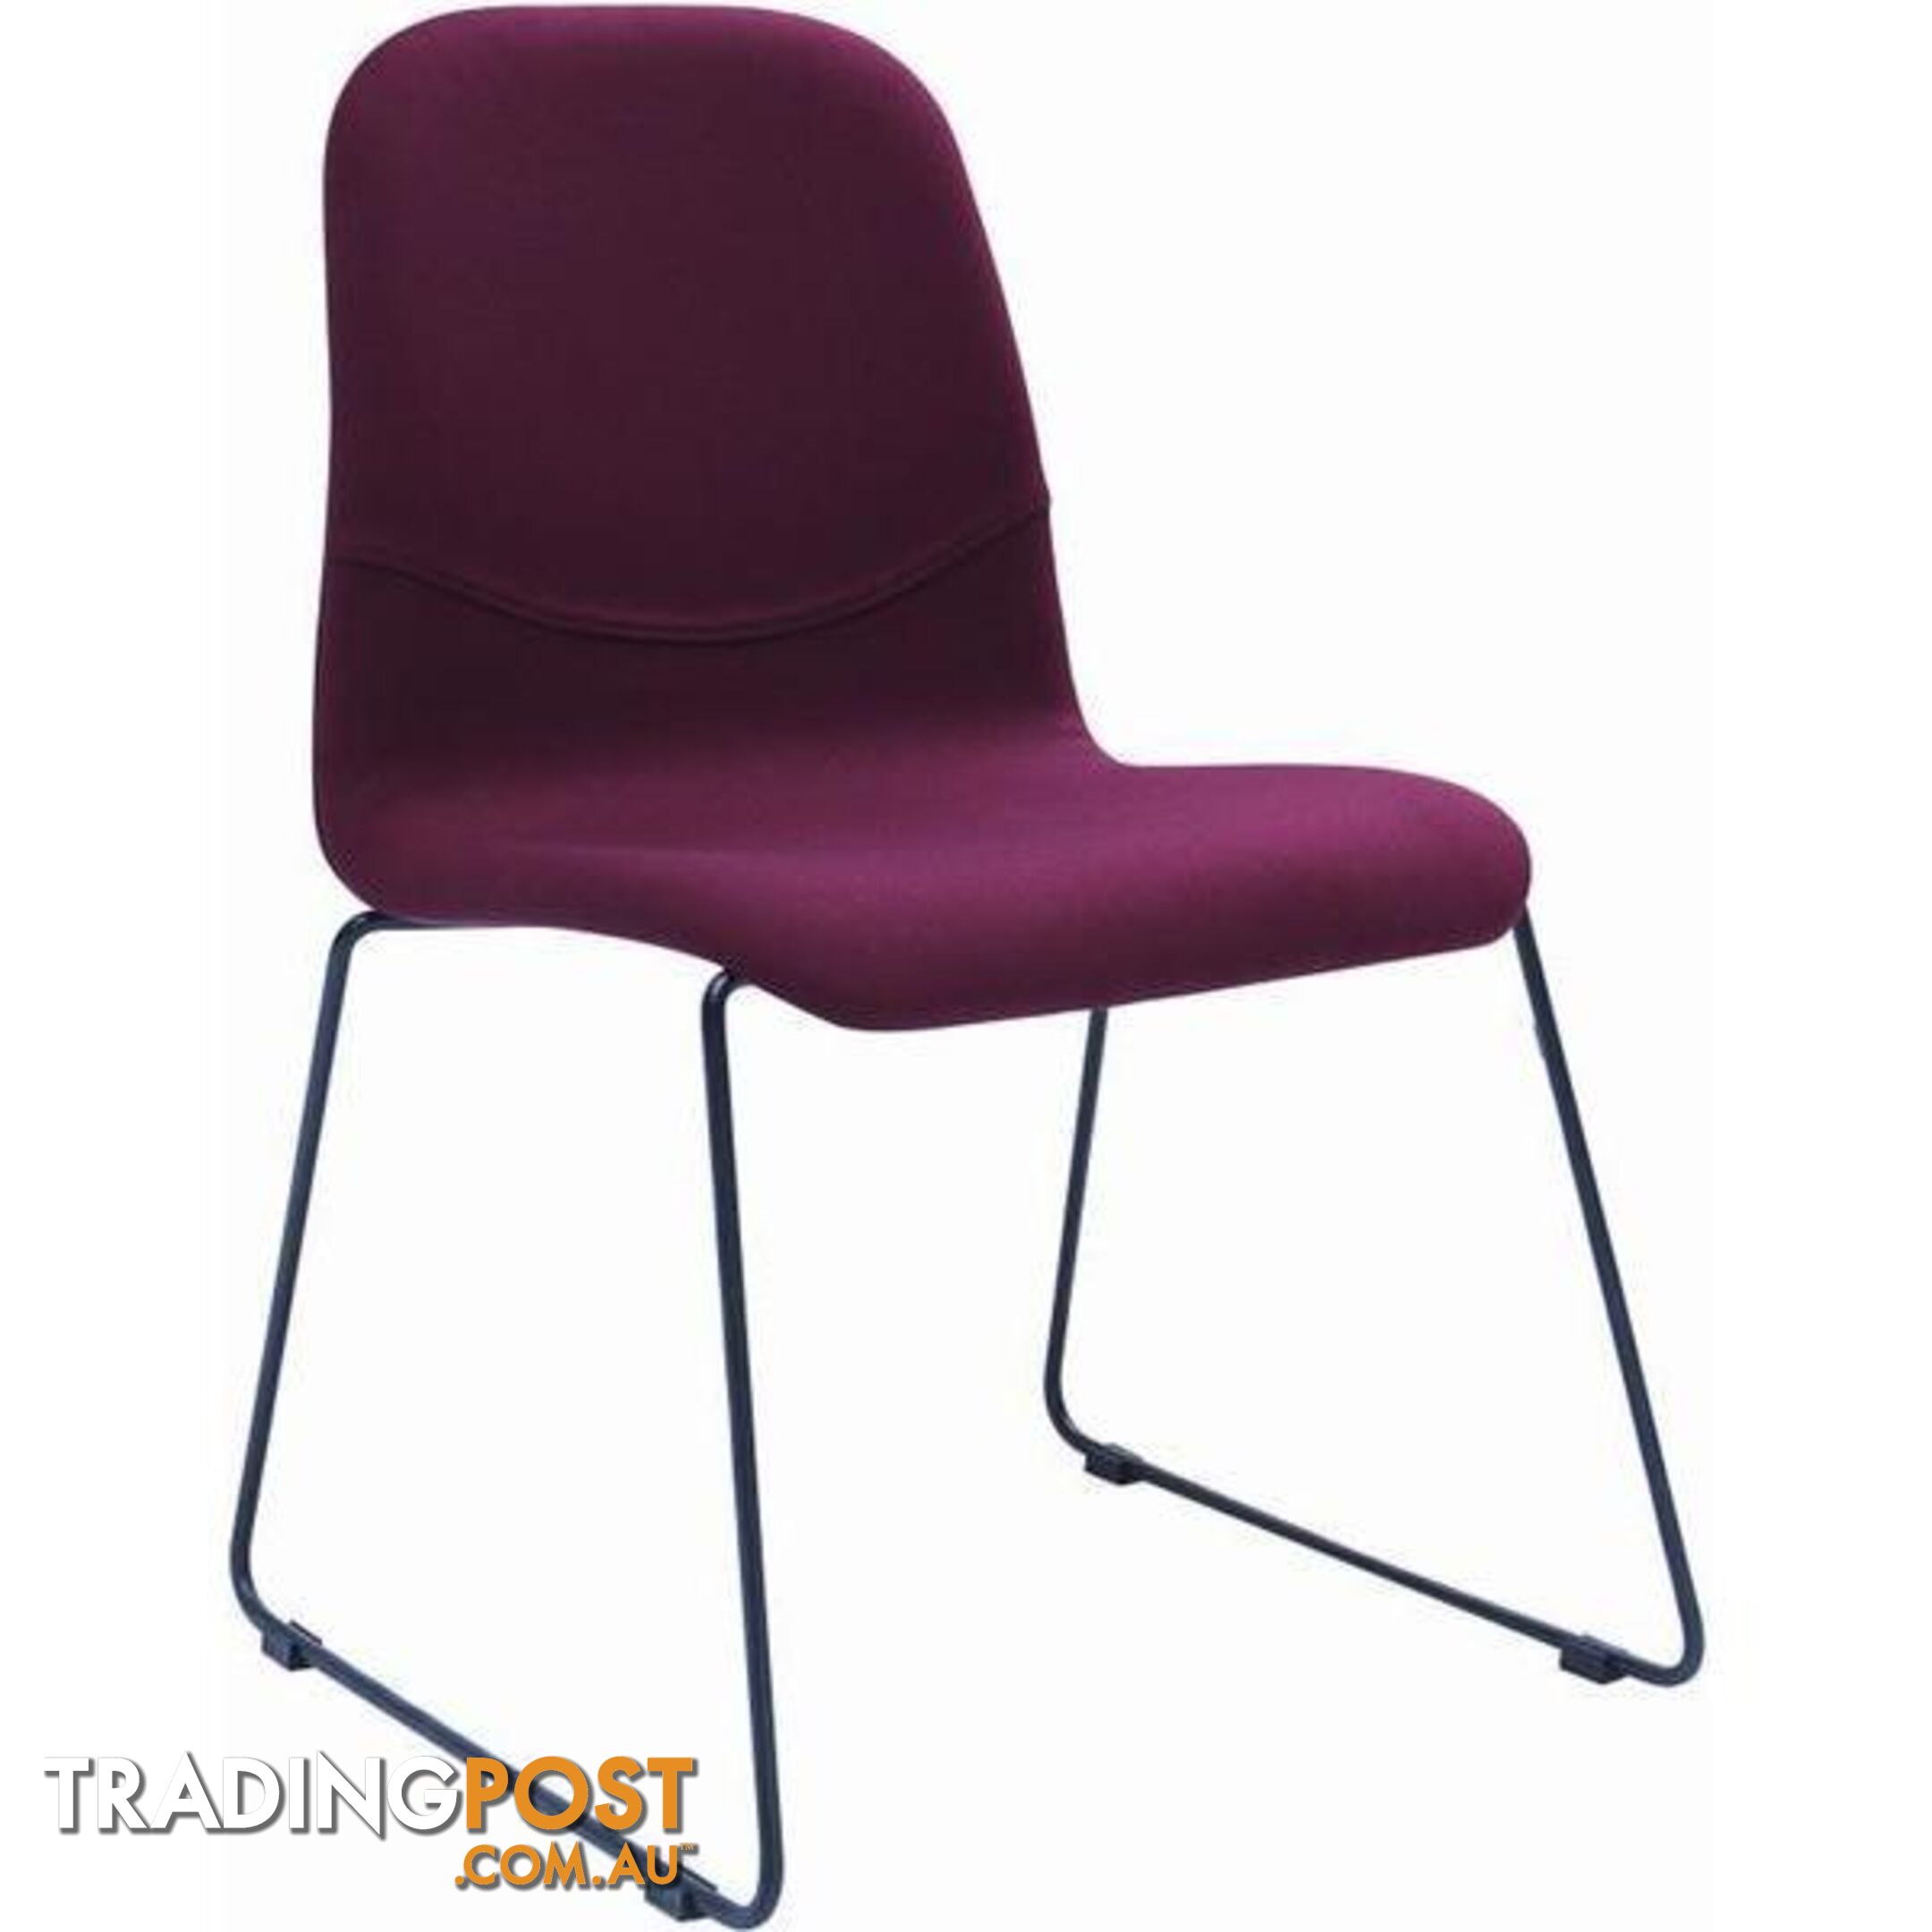 AVA Dining Chair - Black Metal +  Ruby - AVA_DC802-3110 - 9334719000947